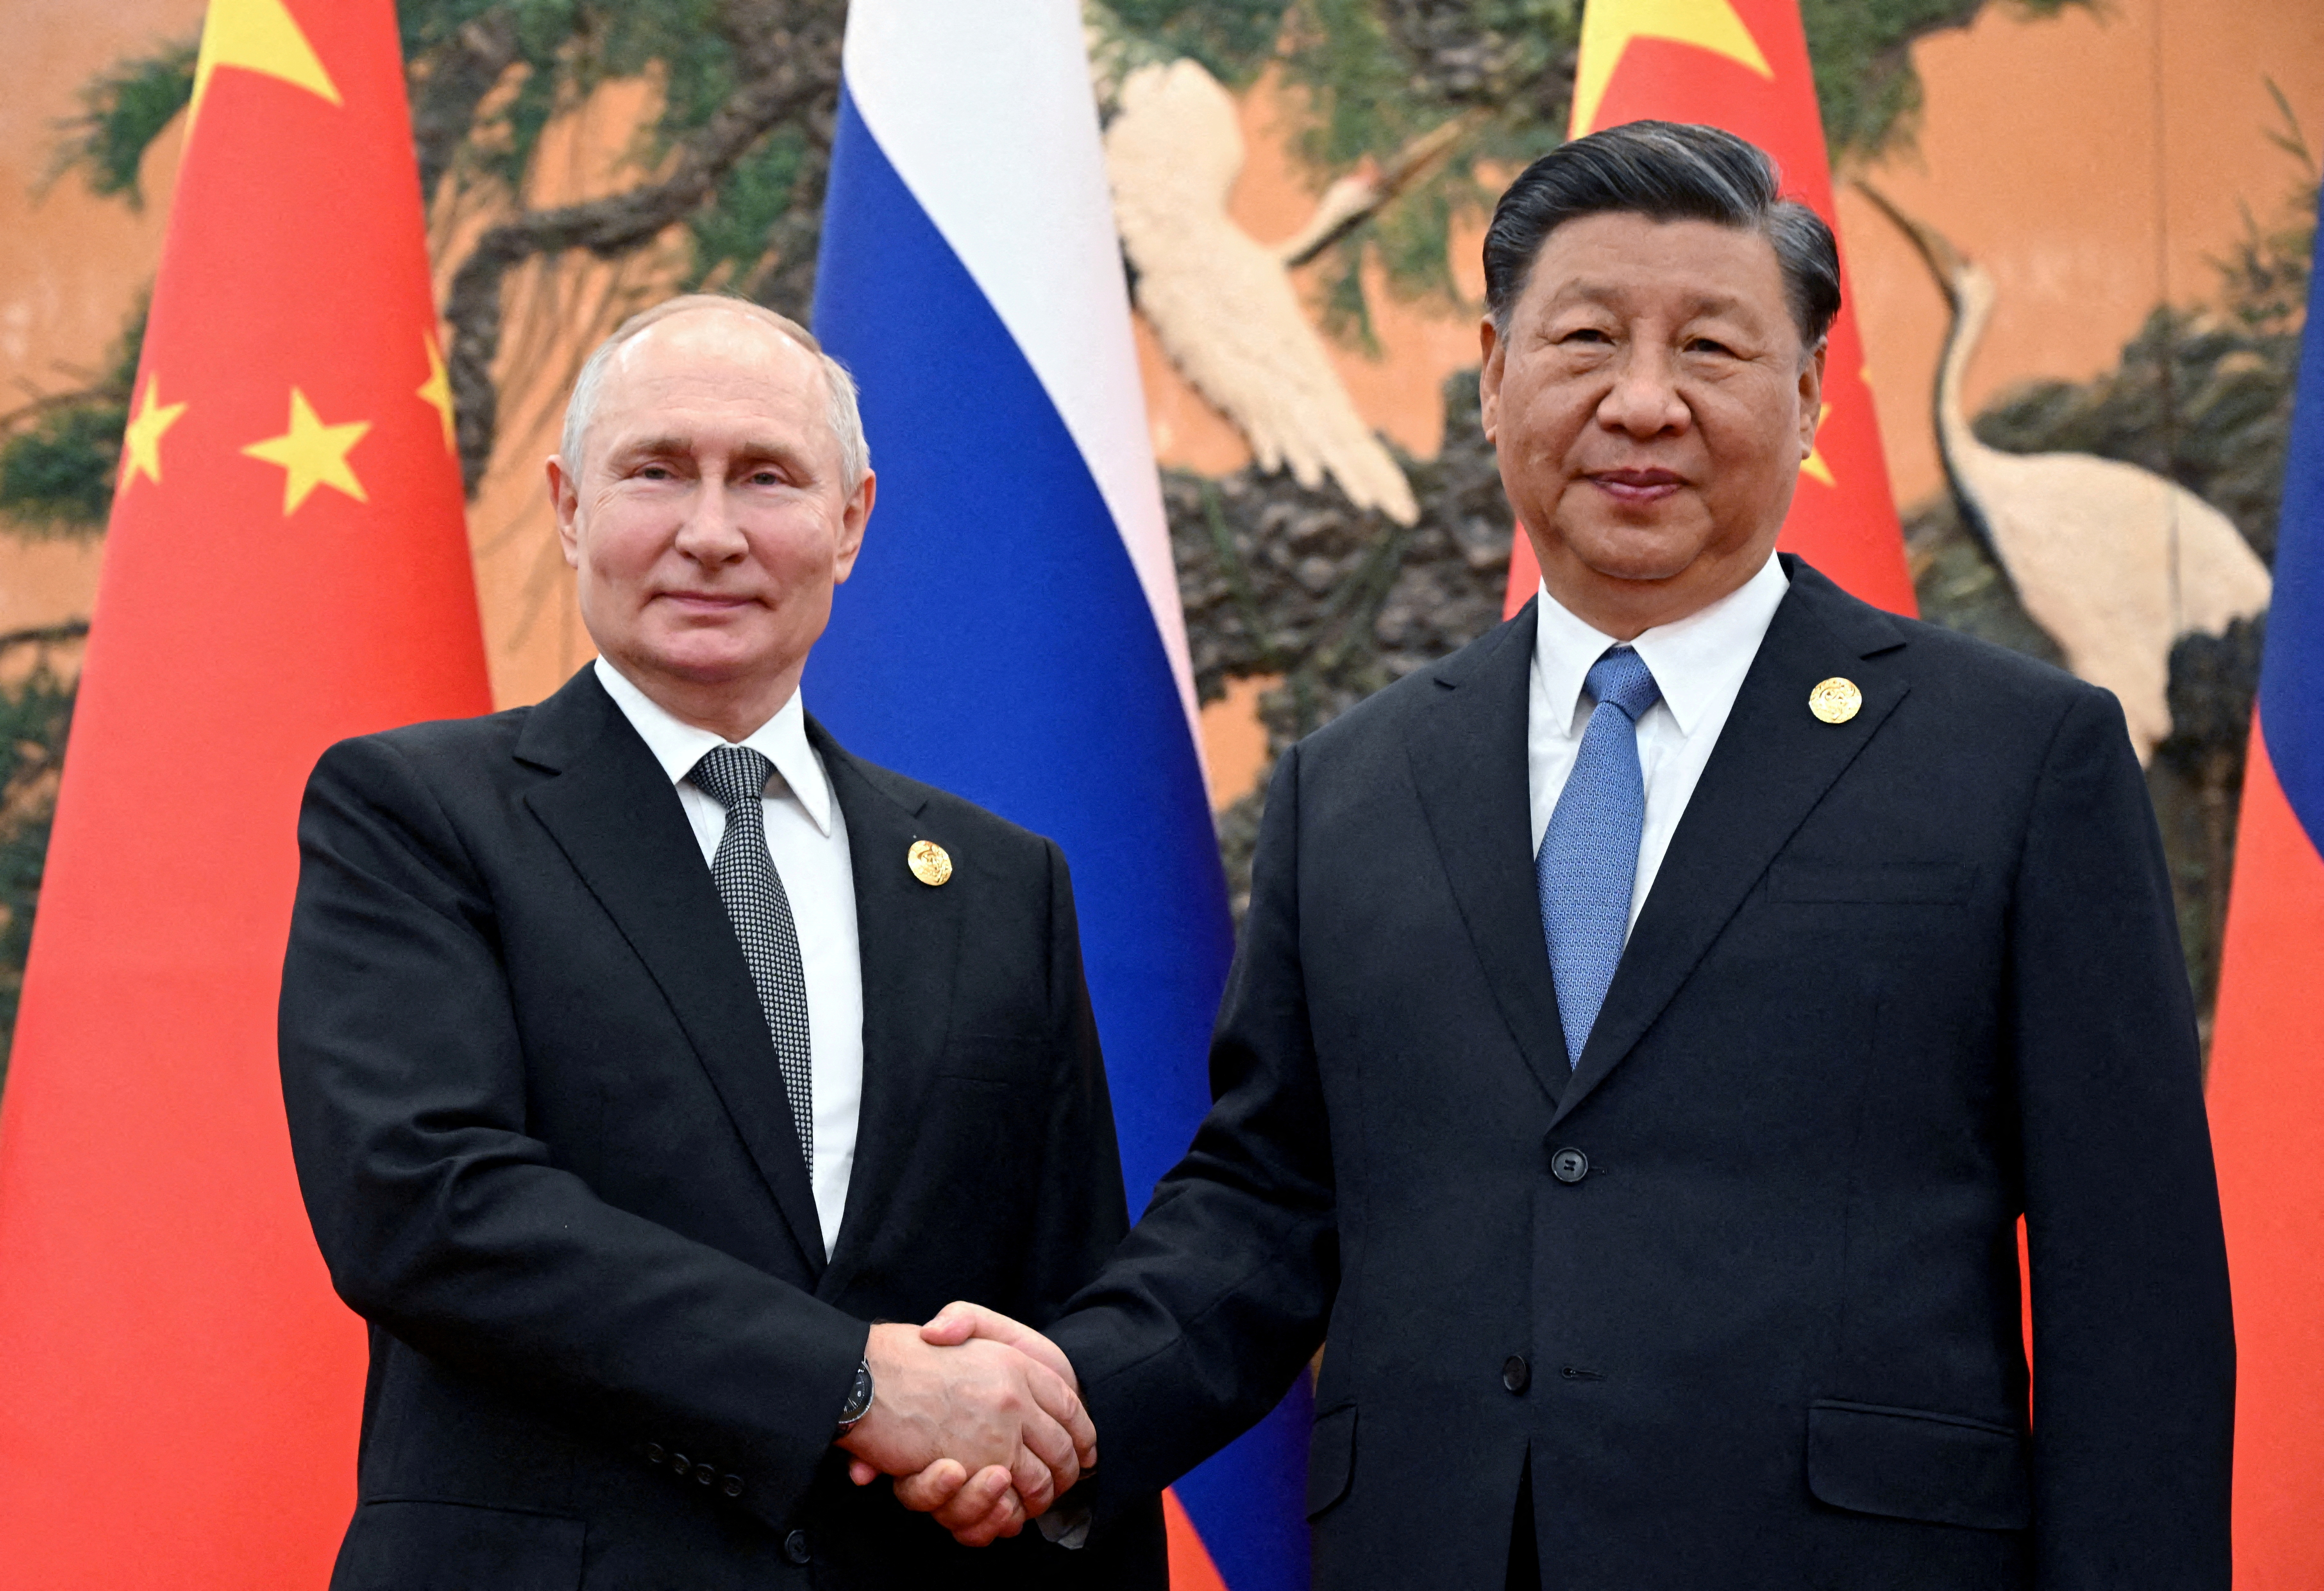 Russian President Vladimir Putin and Chinese President Xi Jinping